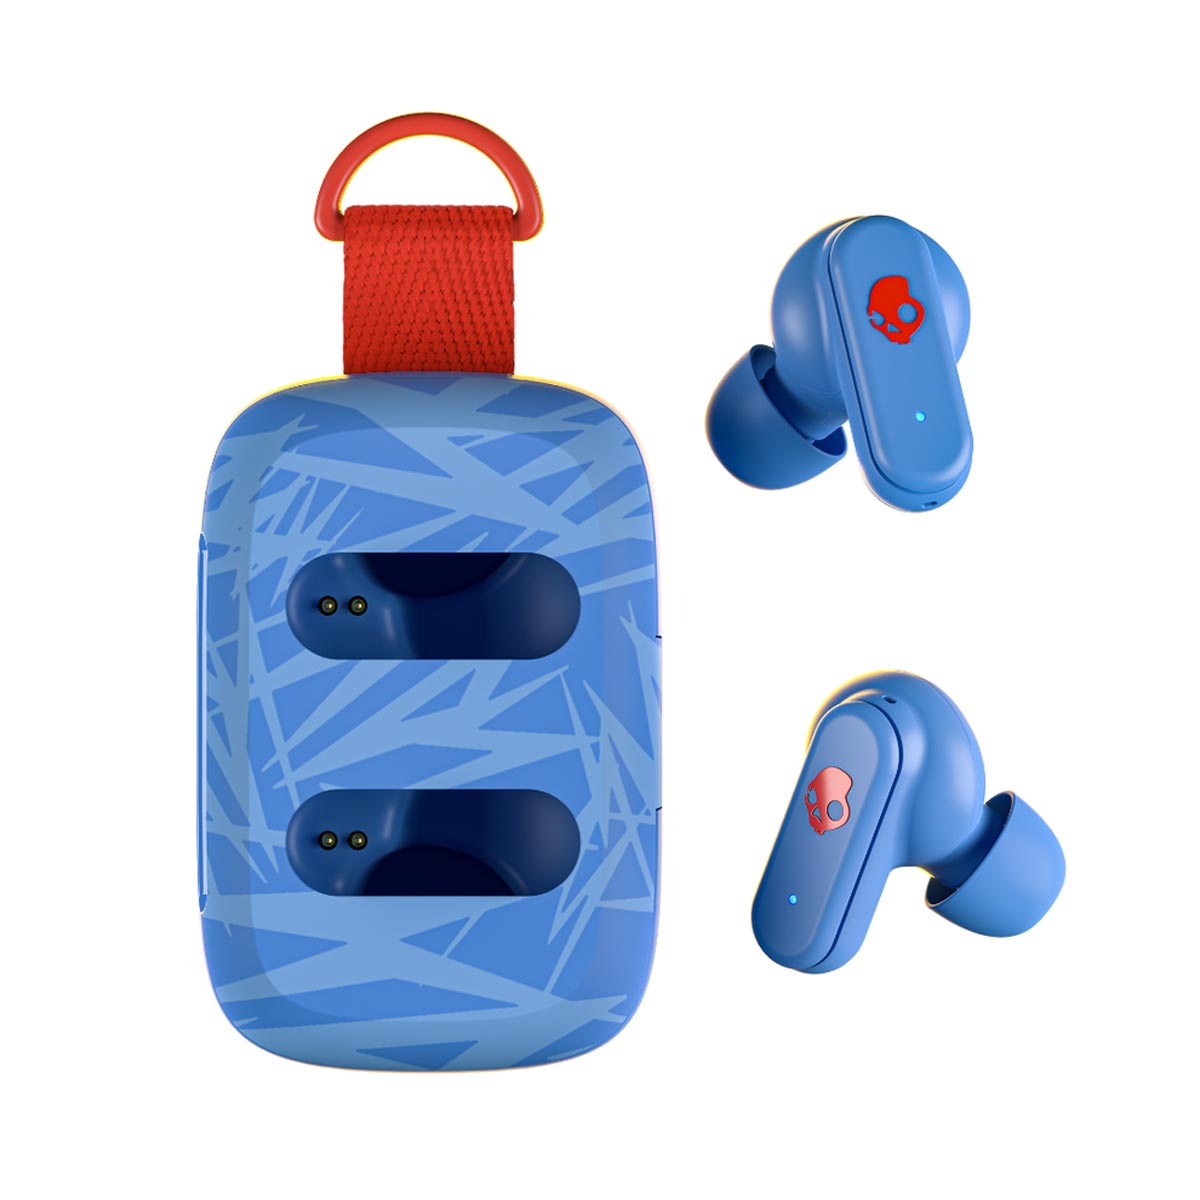 Skullcandy Dime 3 Triple Threat Headphones - Blue image 2